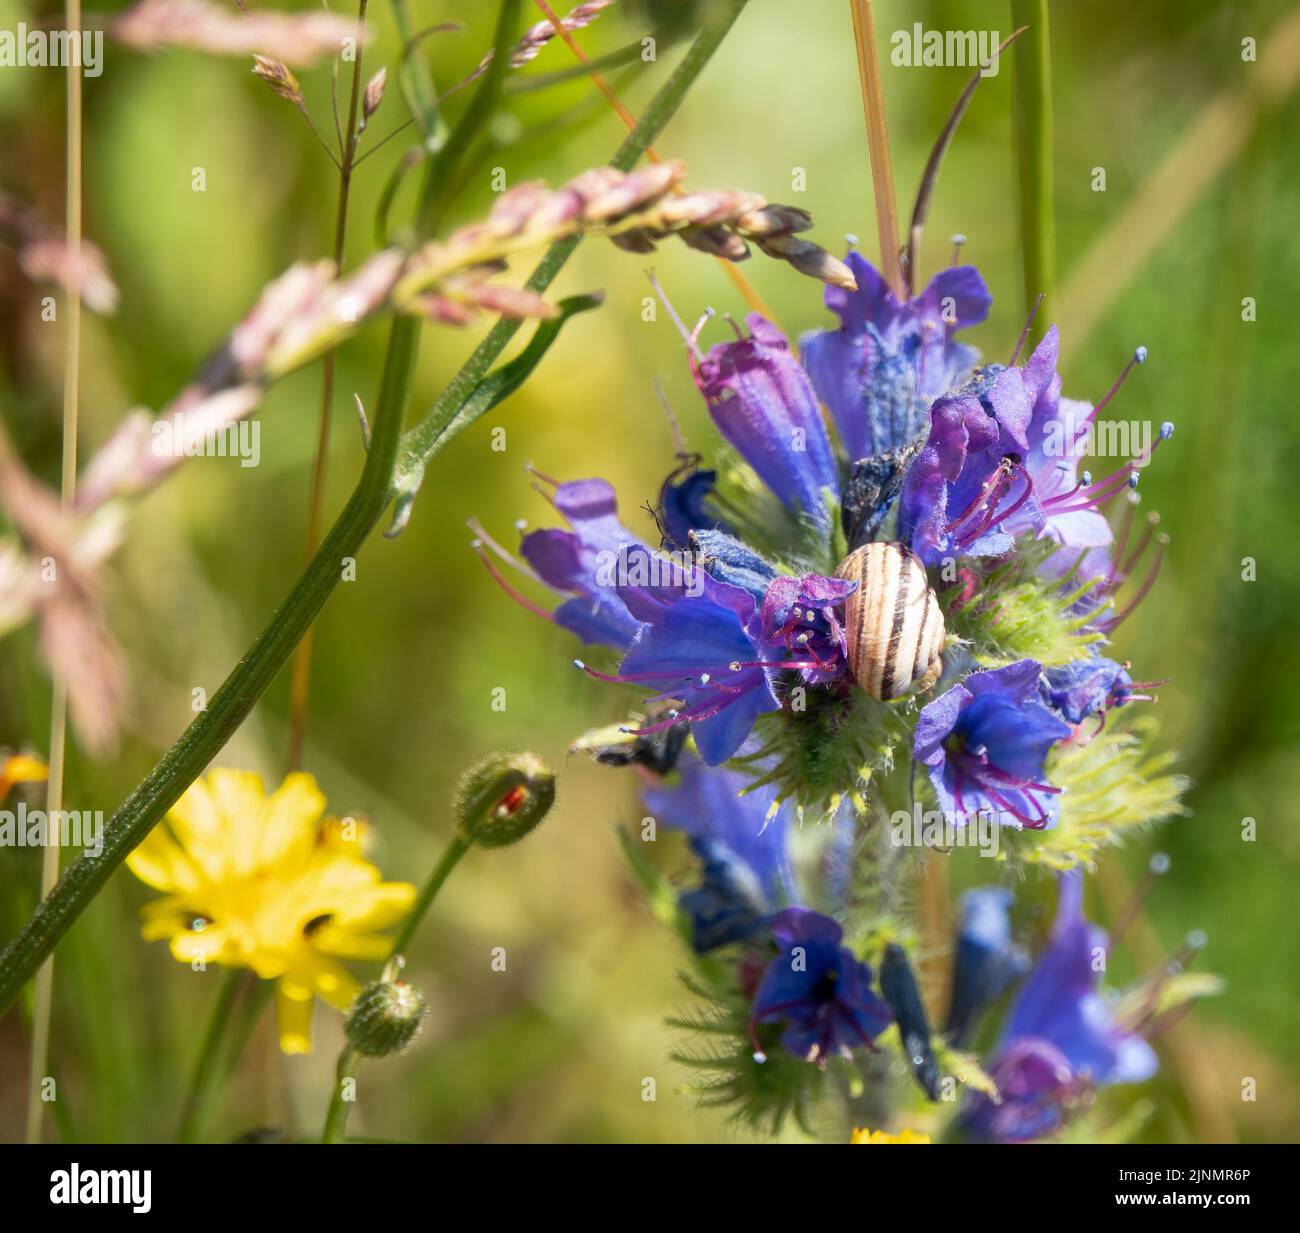 close-up of a Snail amongst blue flowers of Viper's-bugloss (Echium vulgare) Stock Photo